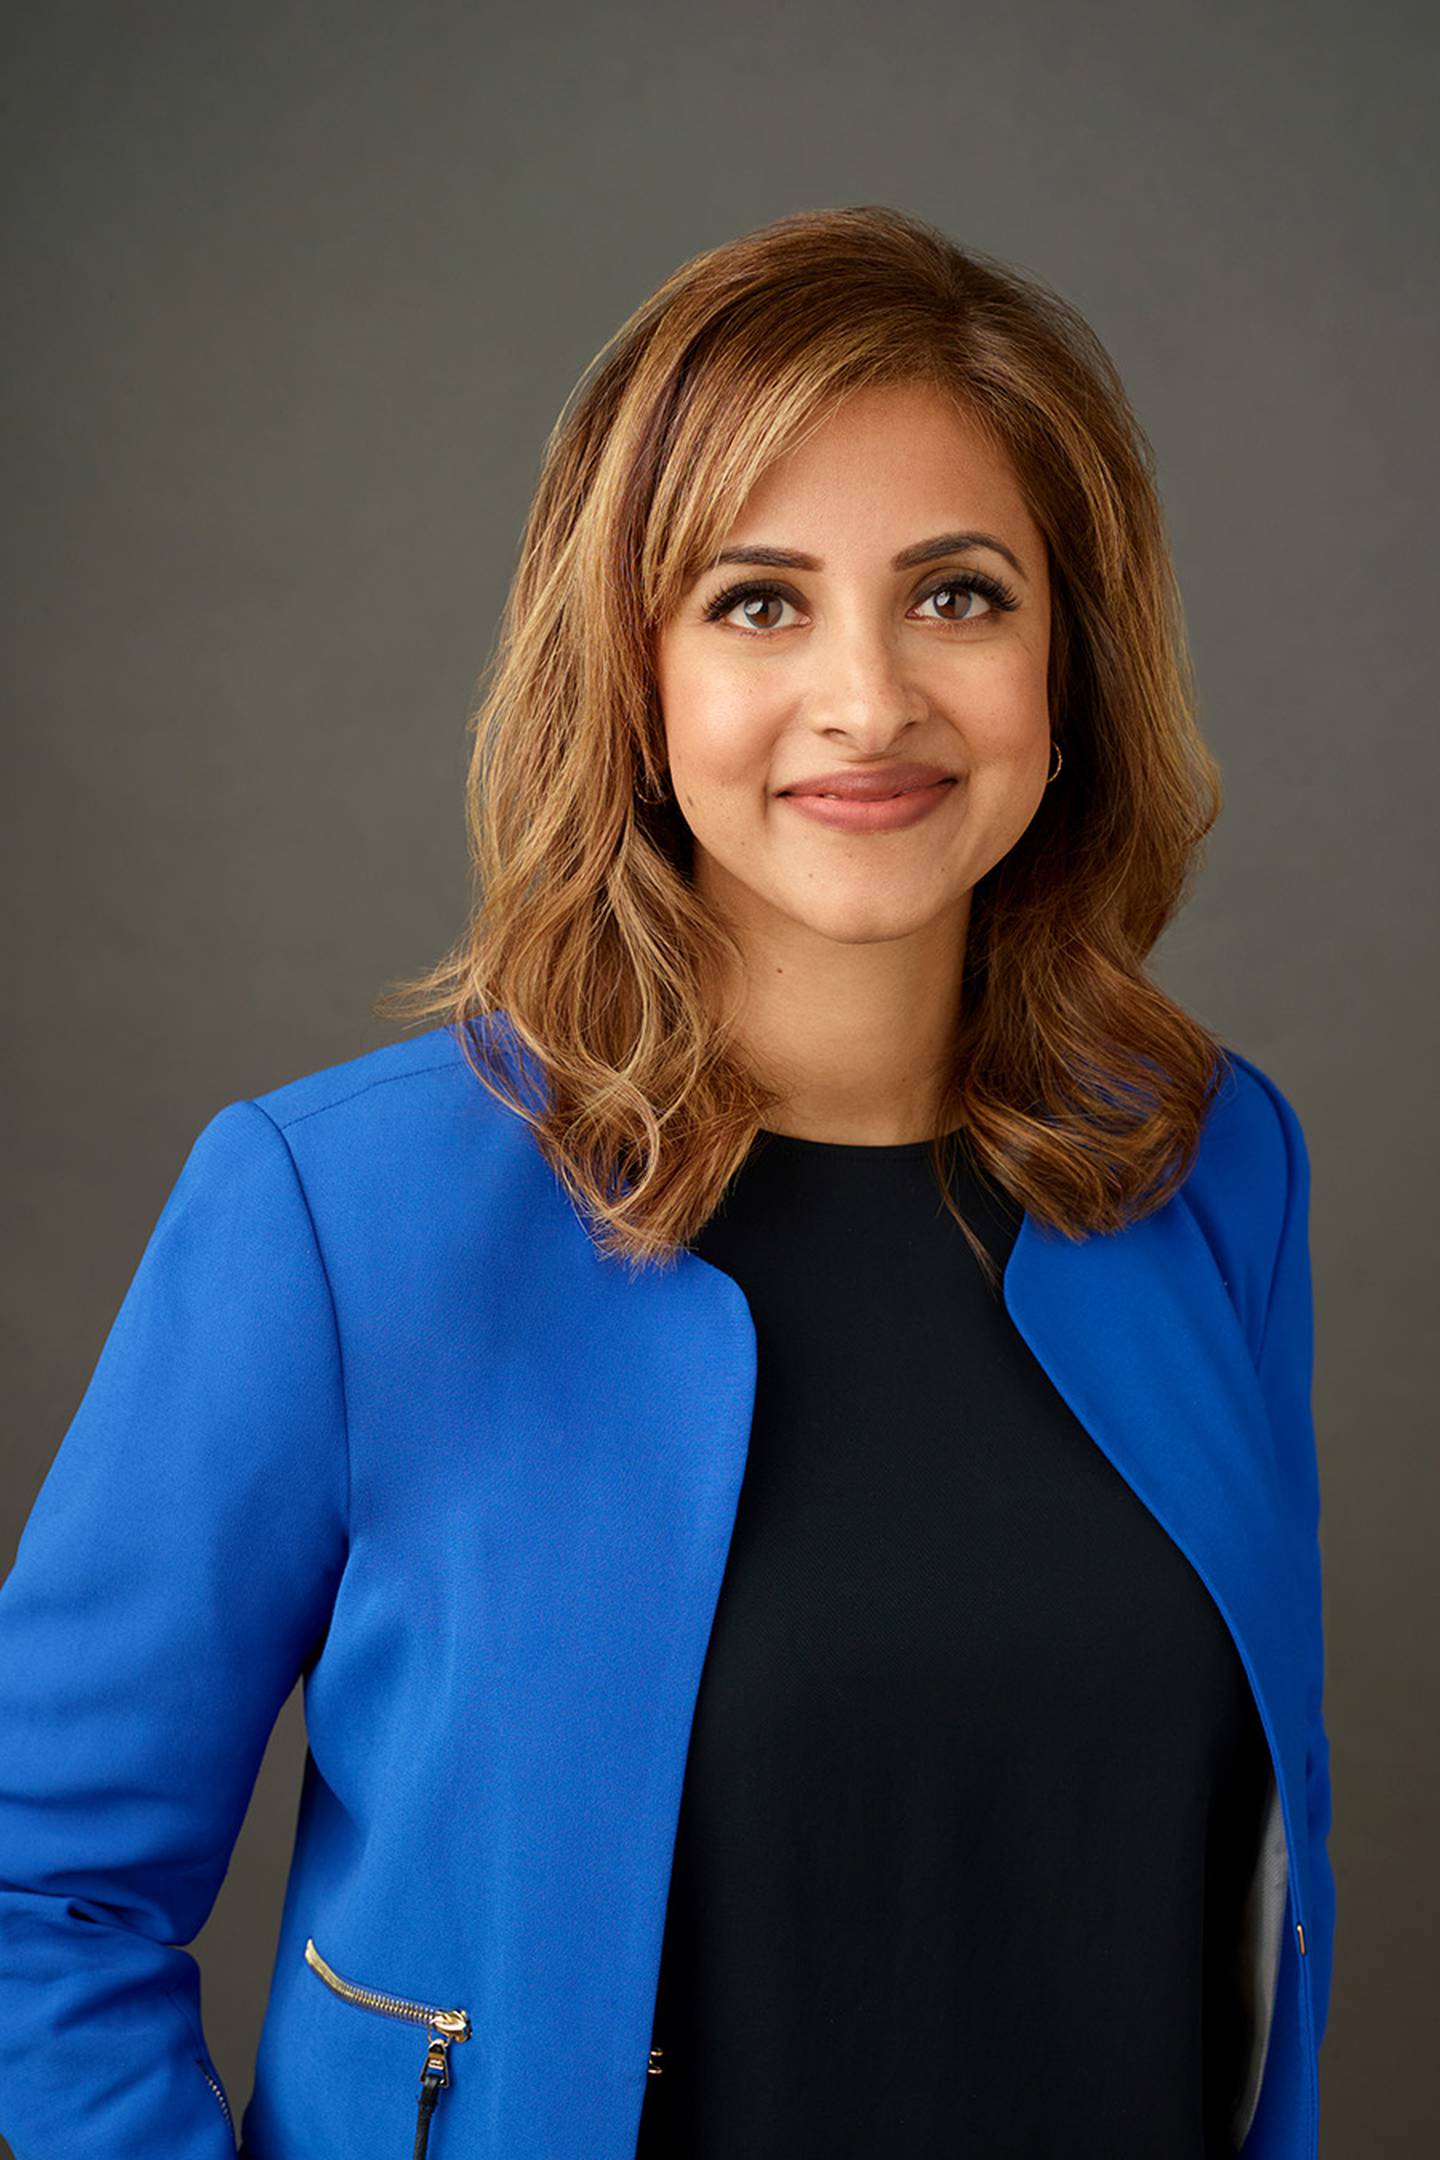 Zena Srivatsa Arnold Sephora US' new chief marketing officer.